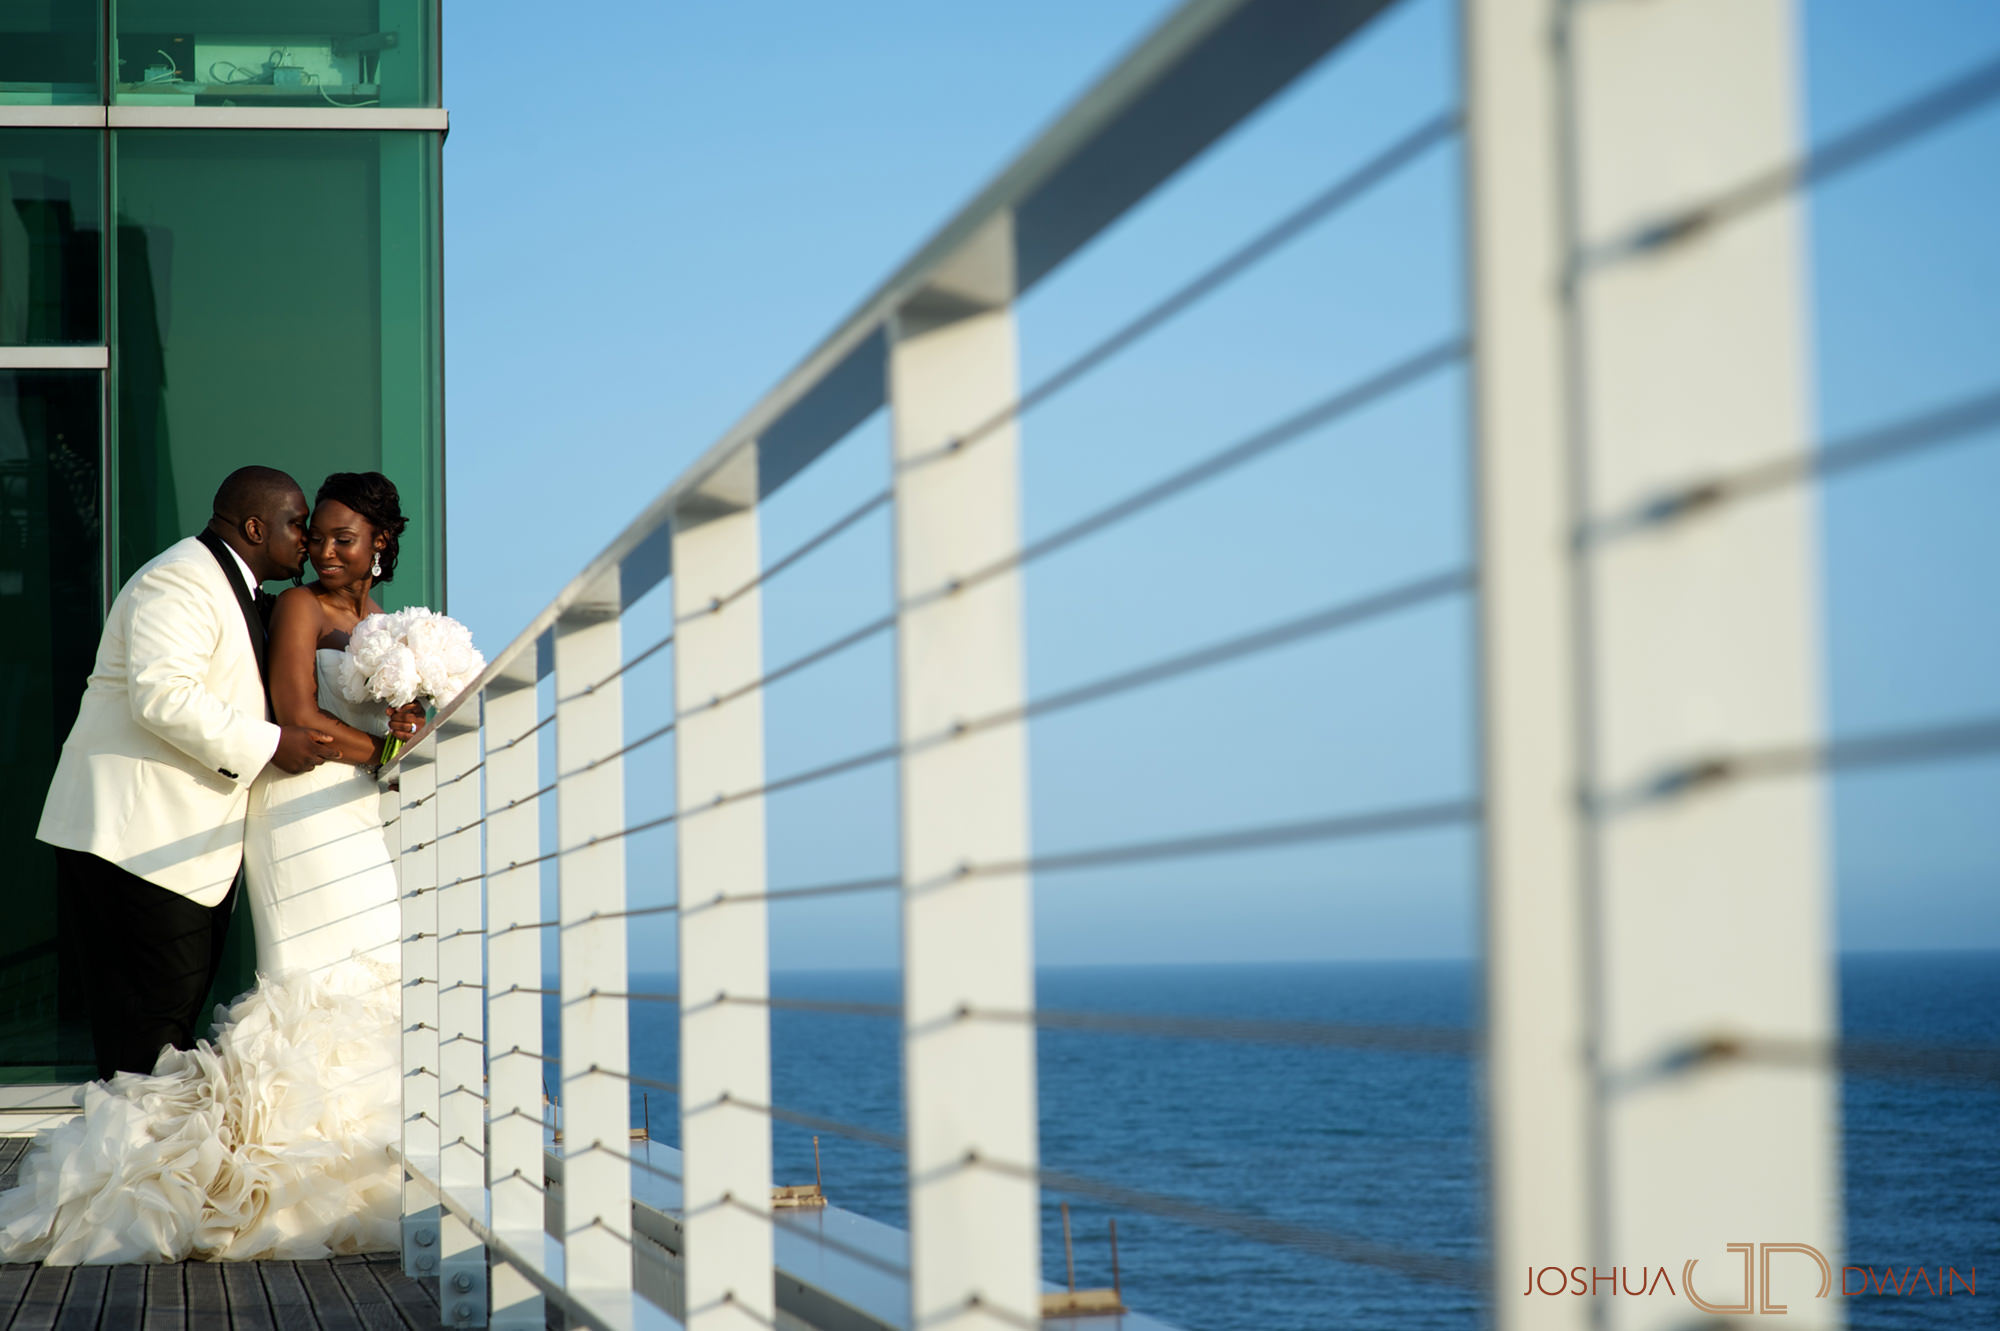 tasha-marcus-021-one-atlantic-atlantic-city-nj-wedding-photographer-joshua-dwain-tasha-marcus-028-one-atlantic-atlantic-city-nj-wedding-photographer-joshua-dwain-2012-05-27_tm_484